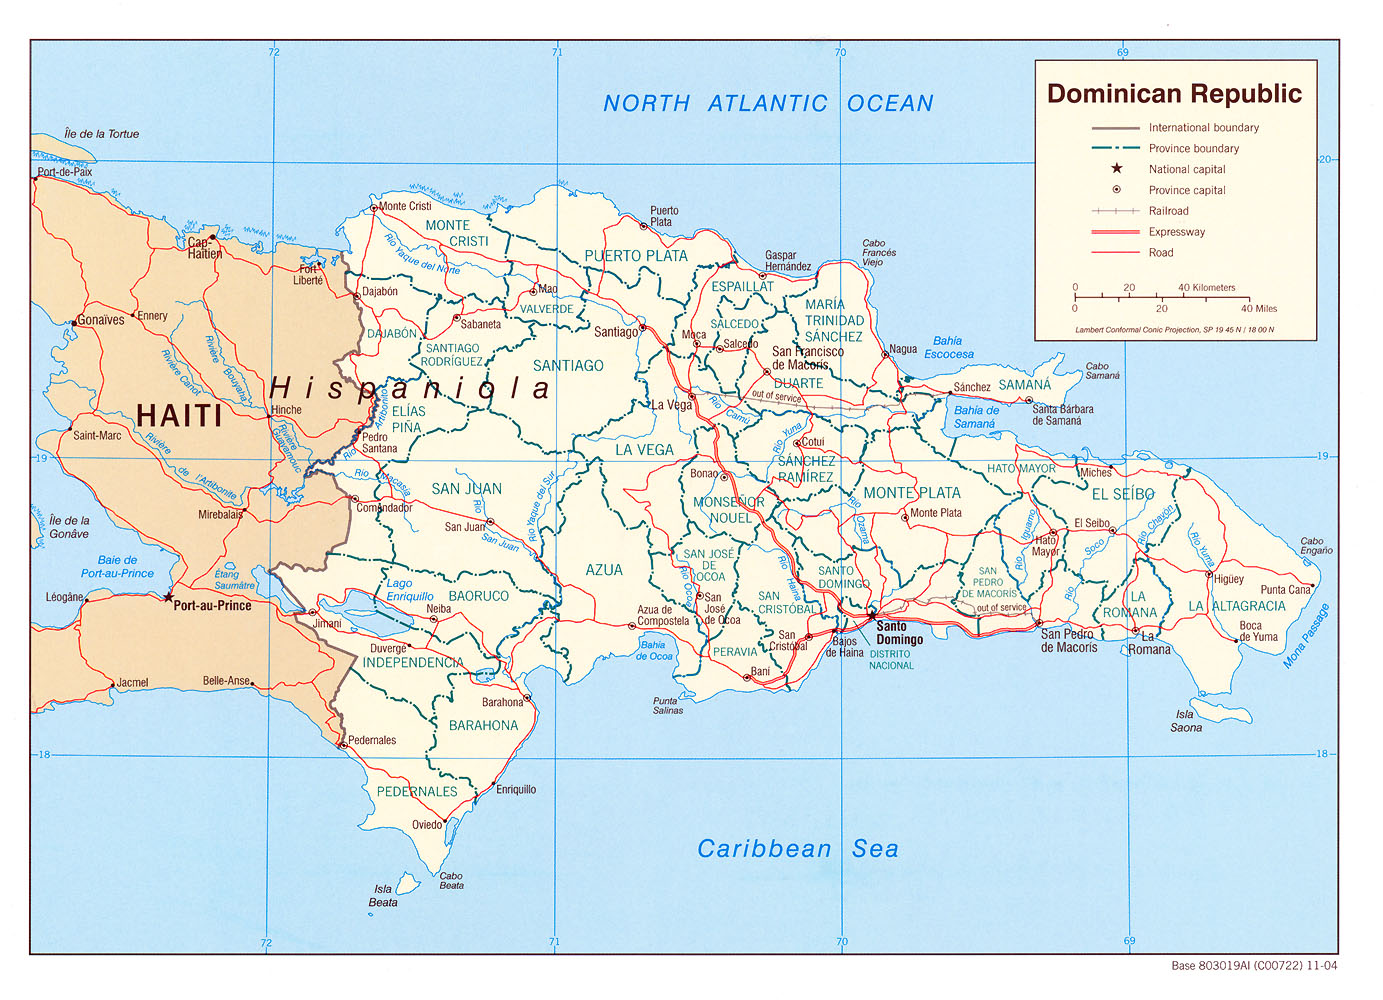 http://www.lib.utexas.edu/maps/americas/dominican_republic_pol_04.jpg